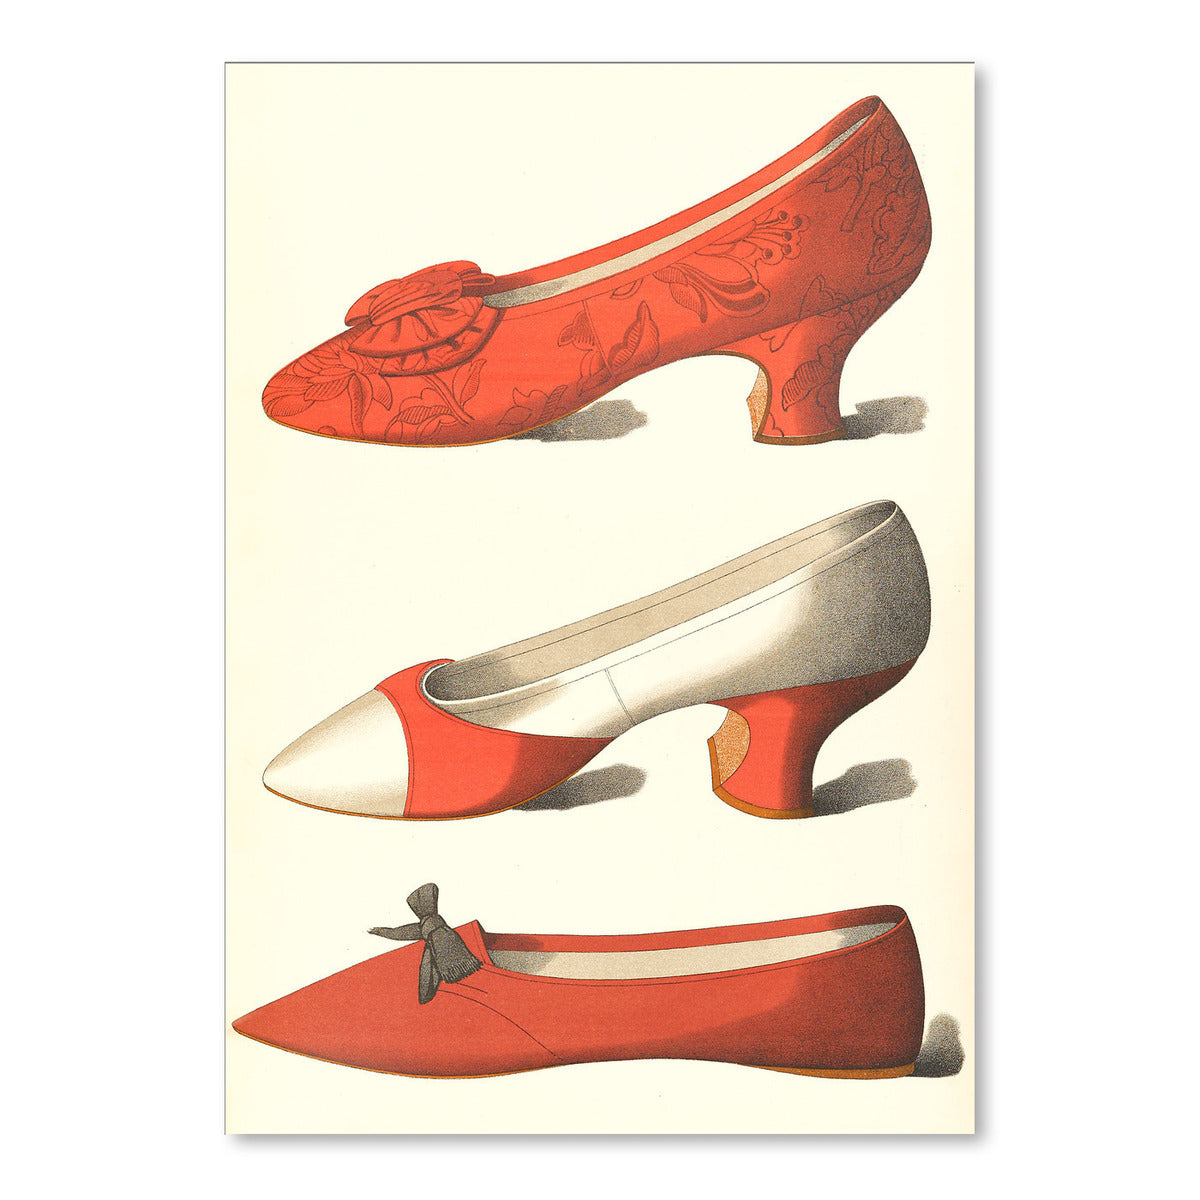 Three Dressy Shoes by Found Image Press Art Print - Art Print - Americanflat